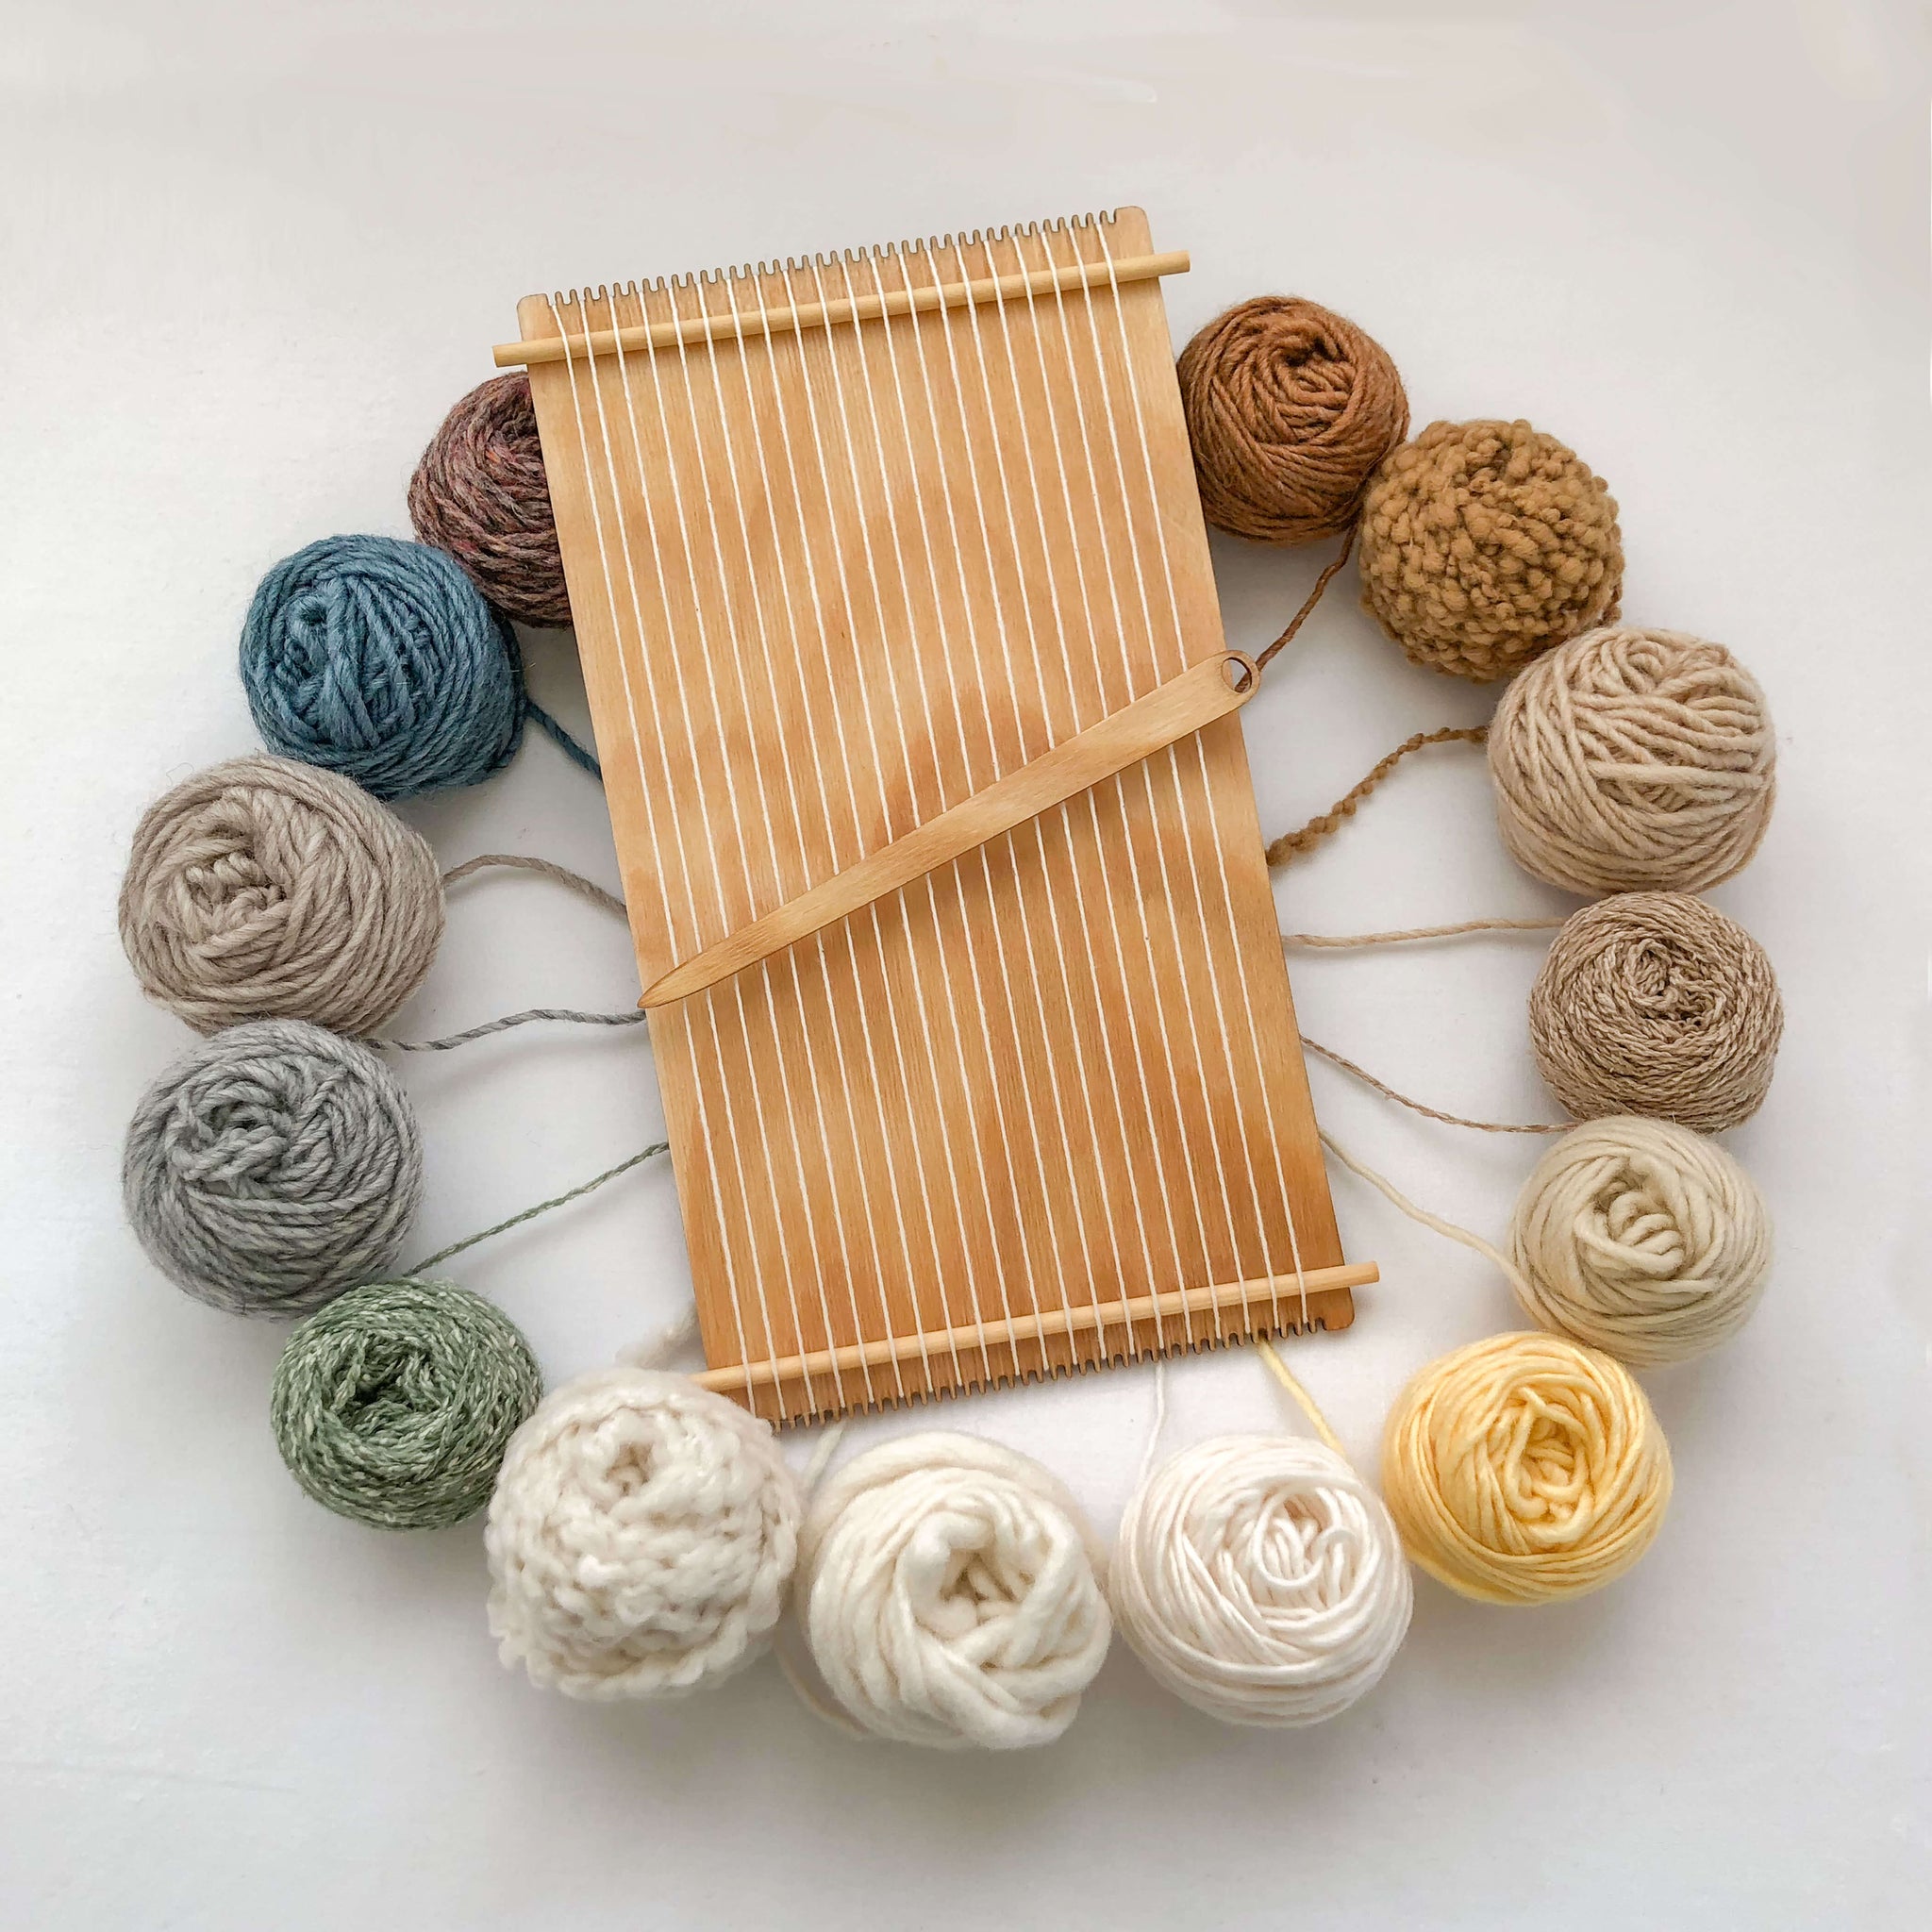 Looms, Weaving Kits, Yarn and tutorials